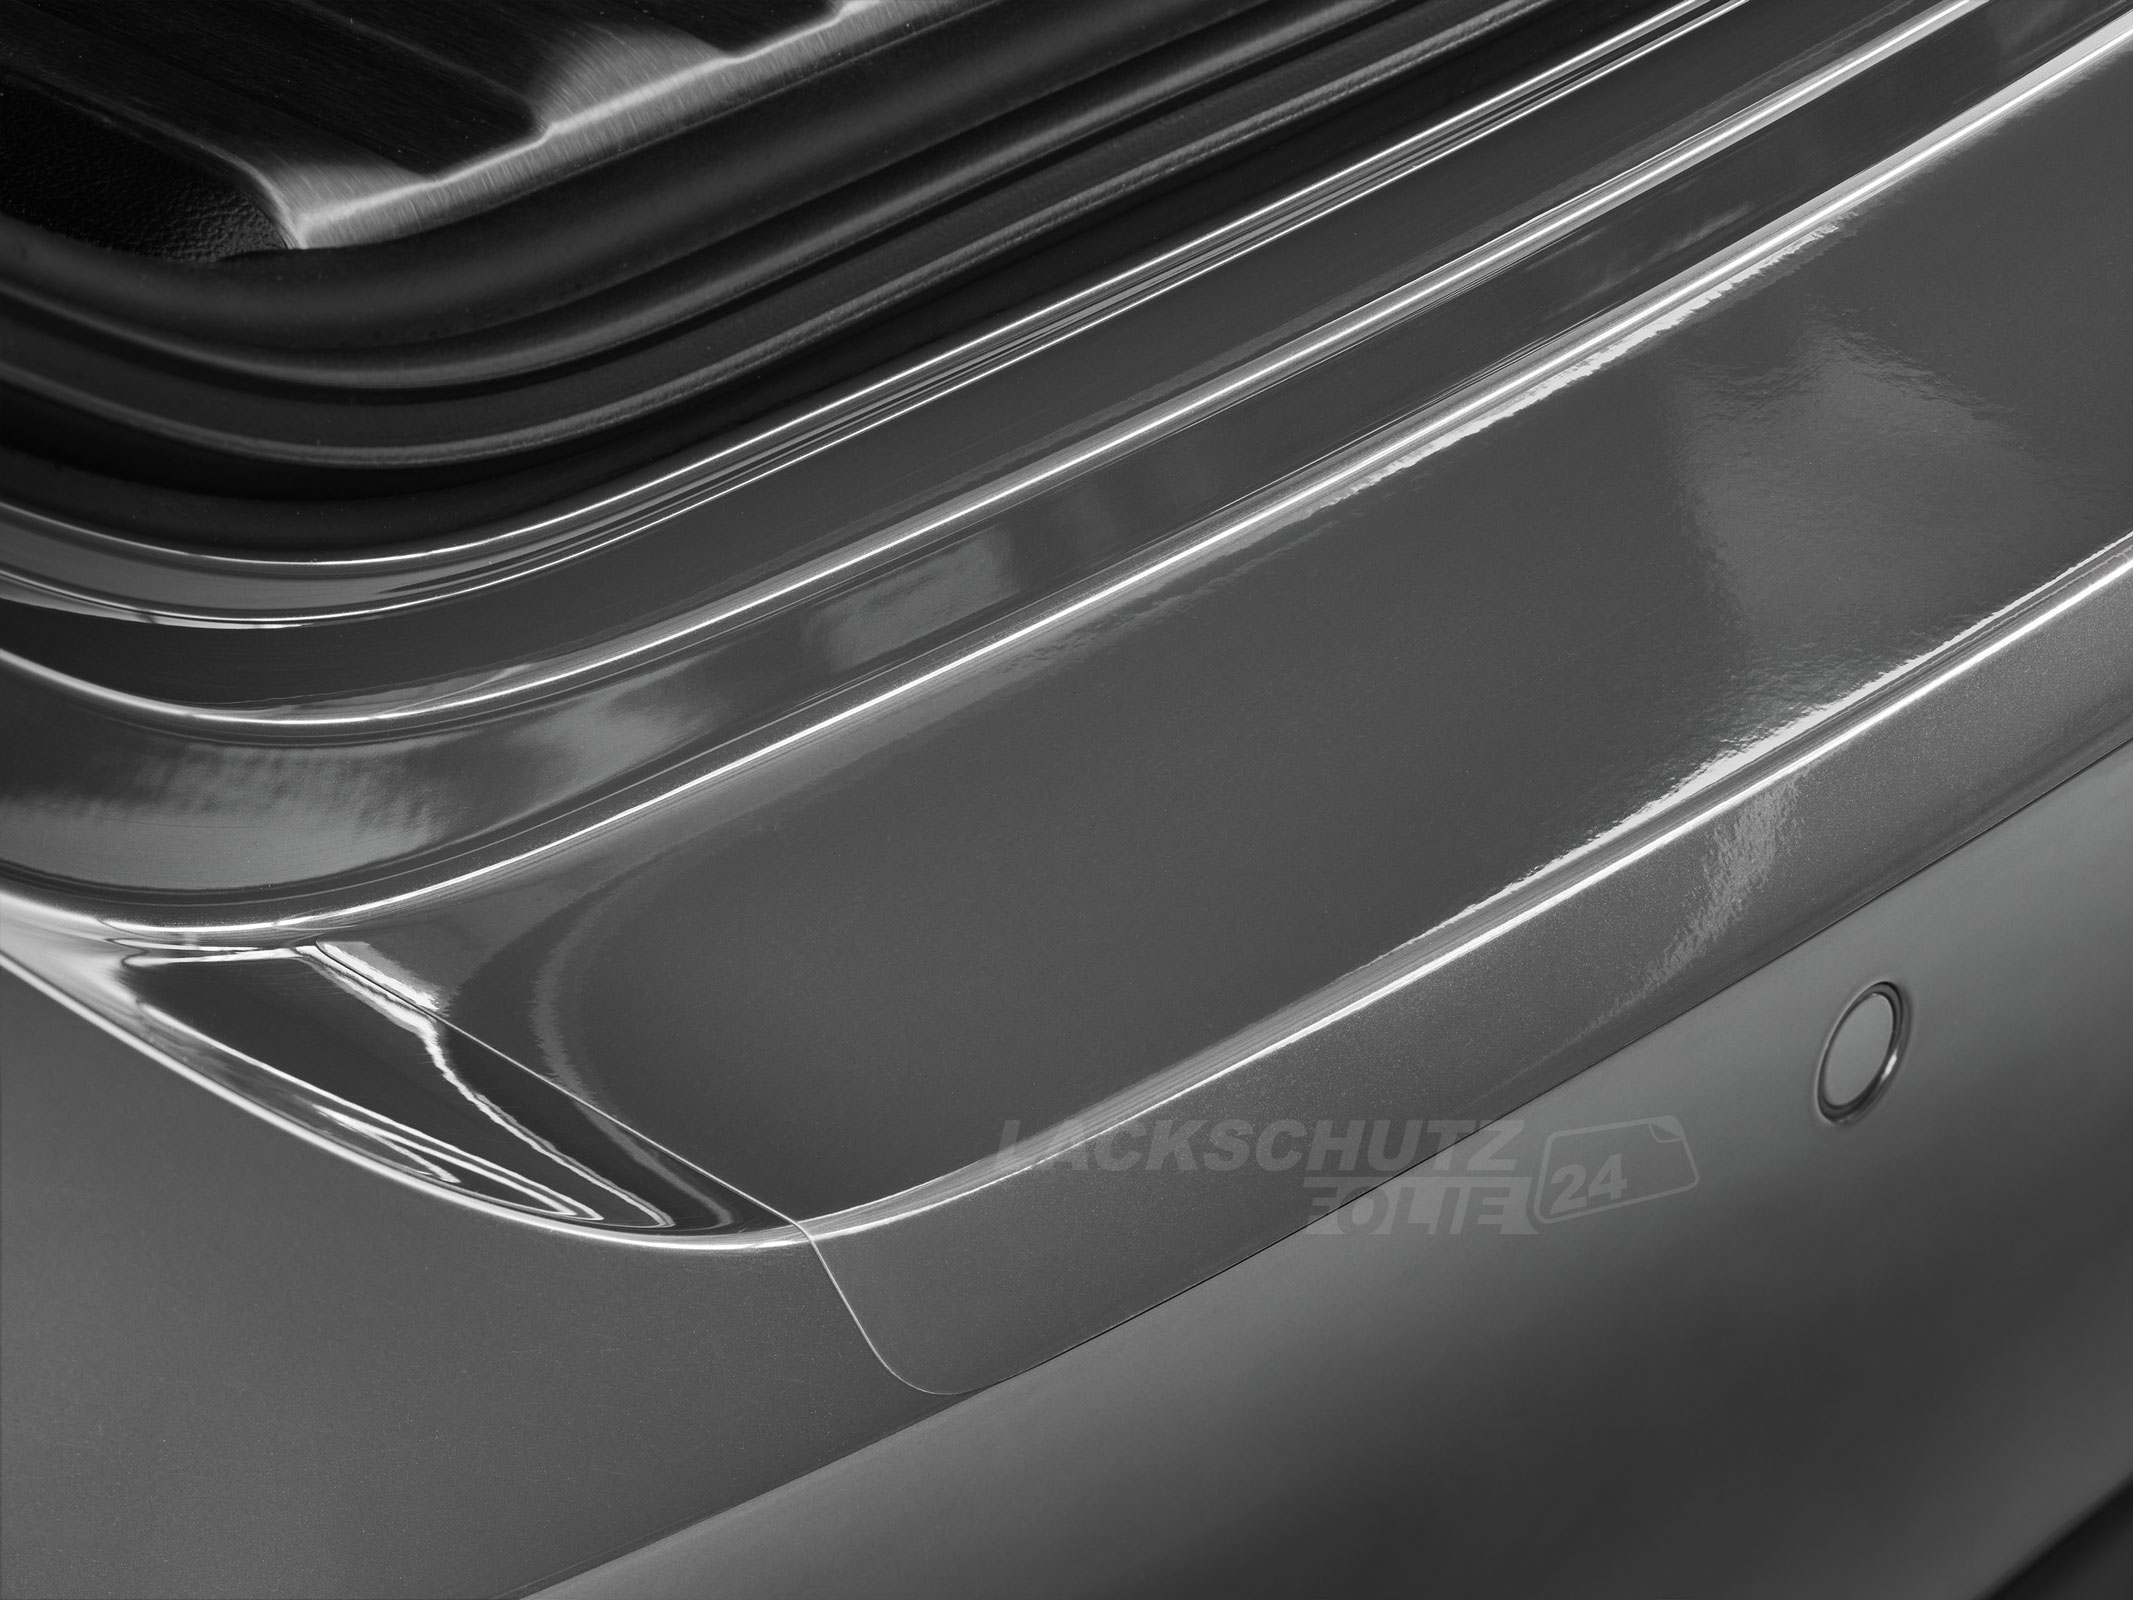 Ladekantenschutzfolie - Transparent Glatt Hochglänzend 240 µm stark für Skoda Octavia Limousine (II) Typ 1Z, BJ 2009-2013, Facelift